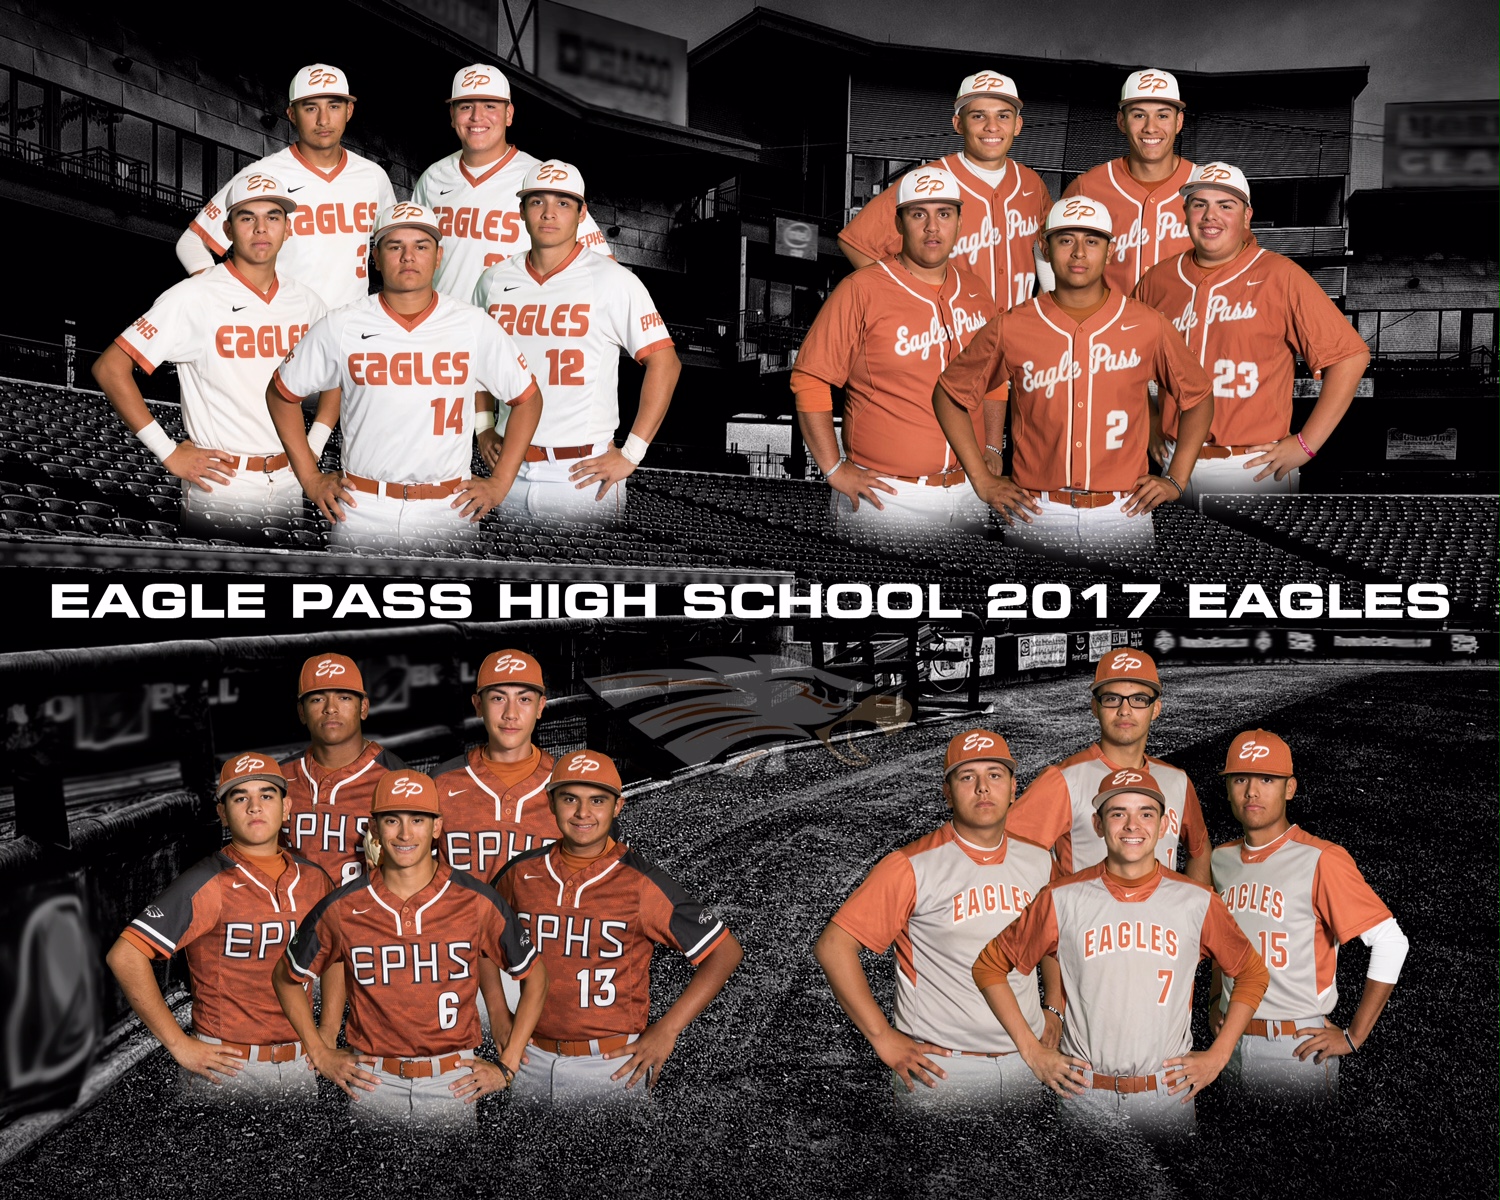 2017 eagles baseball team pic.jpg